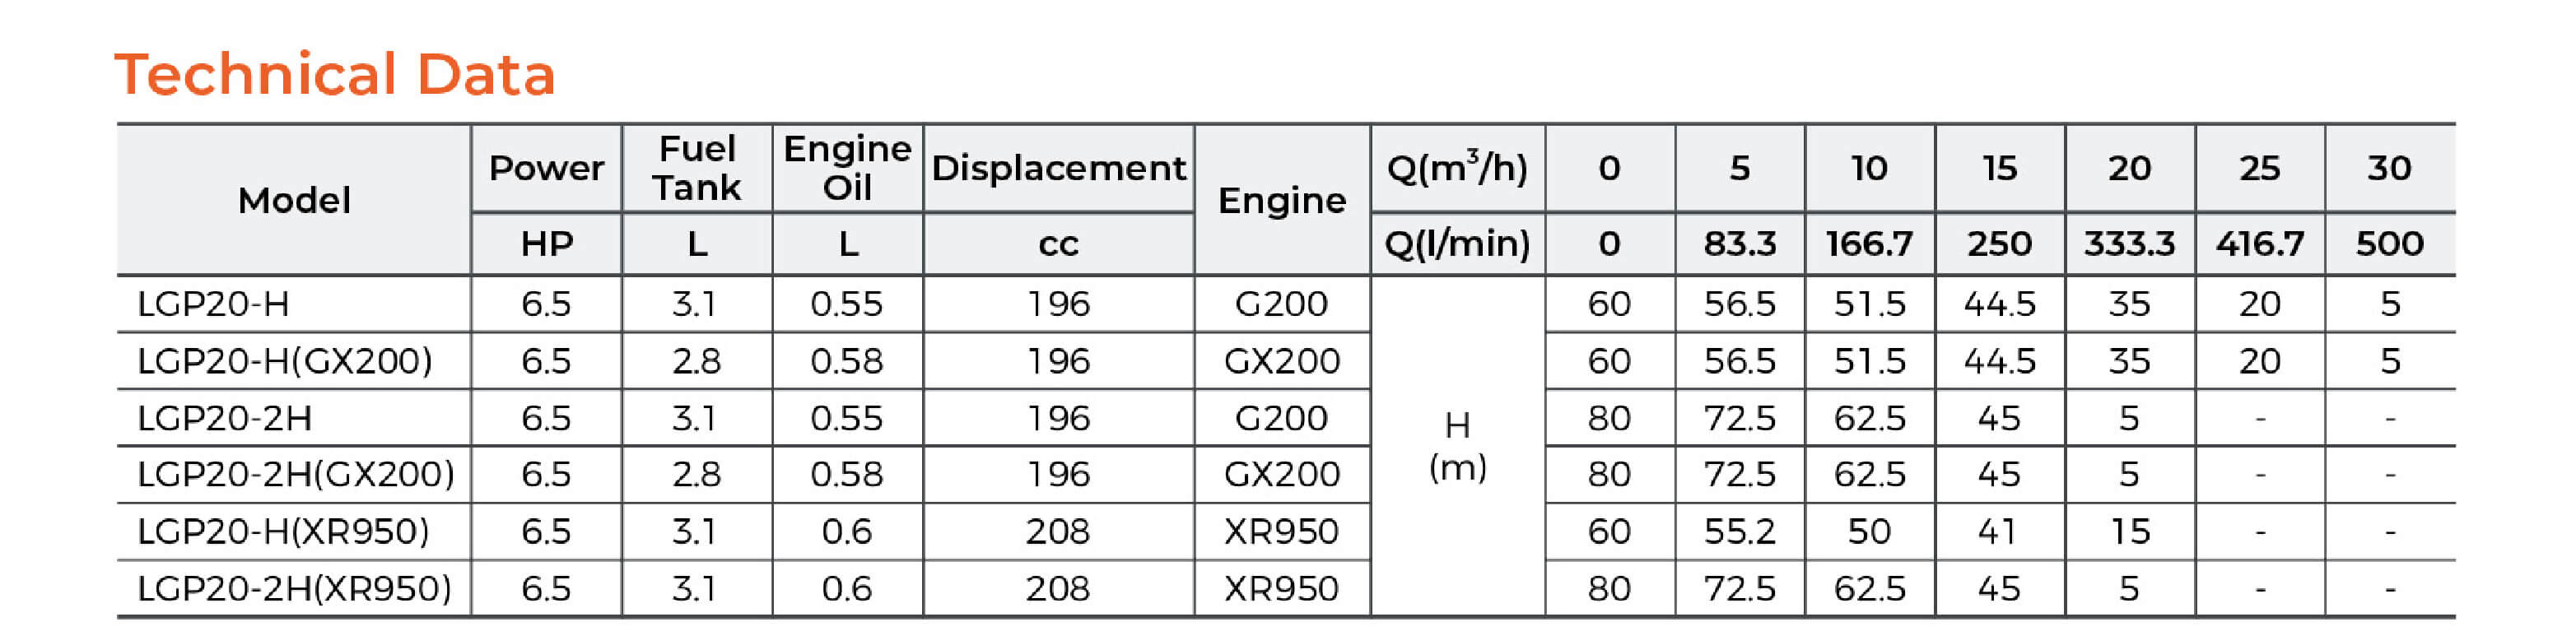 LGP20-H Gasoline Water Pump Technical Data